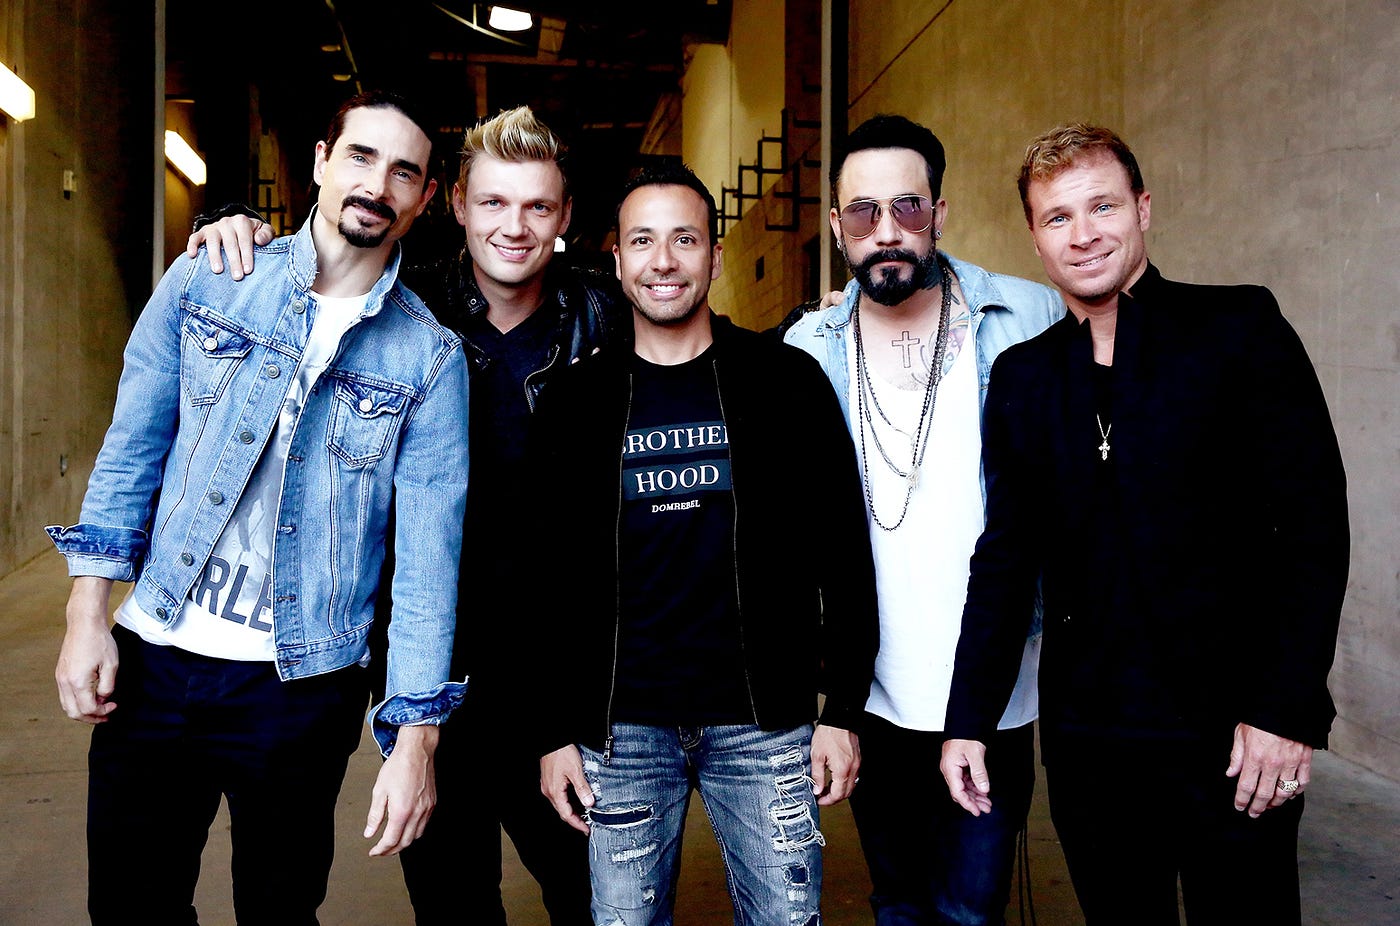 Backstreet Boys: 'I Want It That Way' Has 2 Versions; The Original Lyrics  Make More Sense